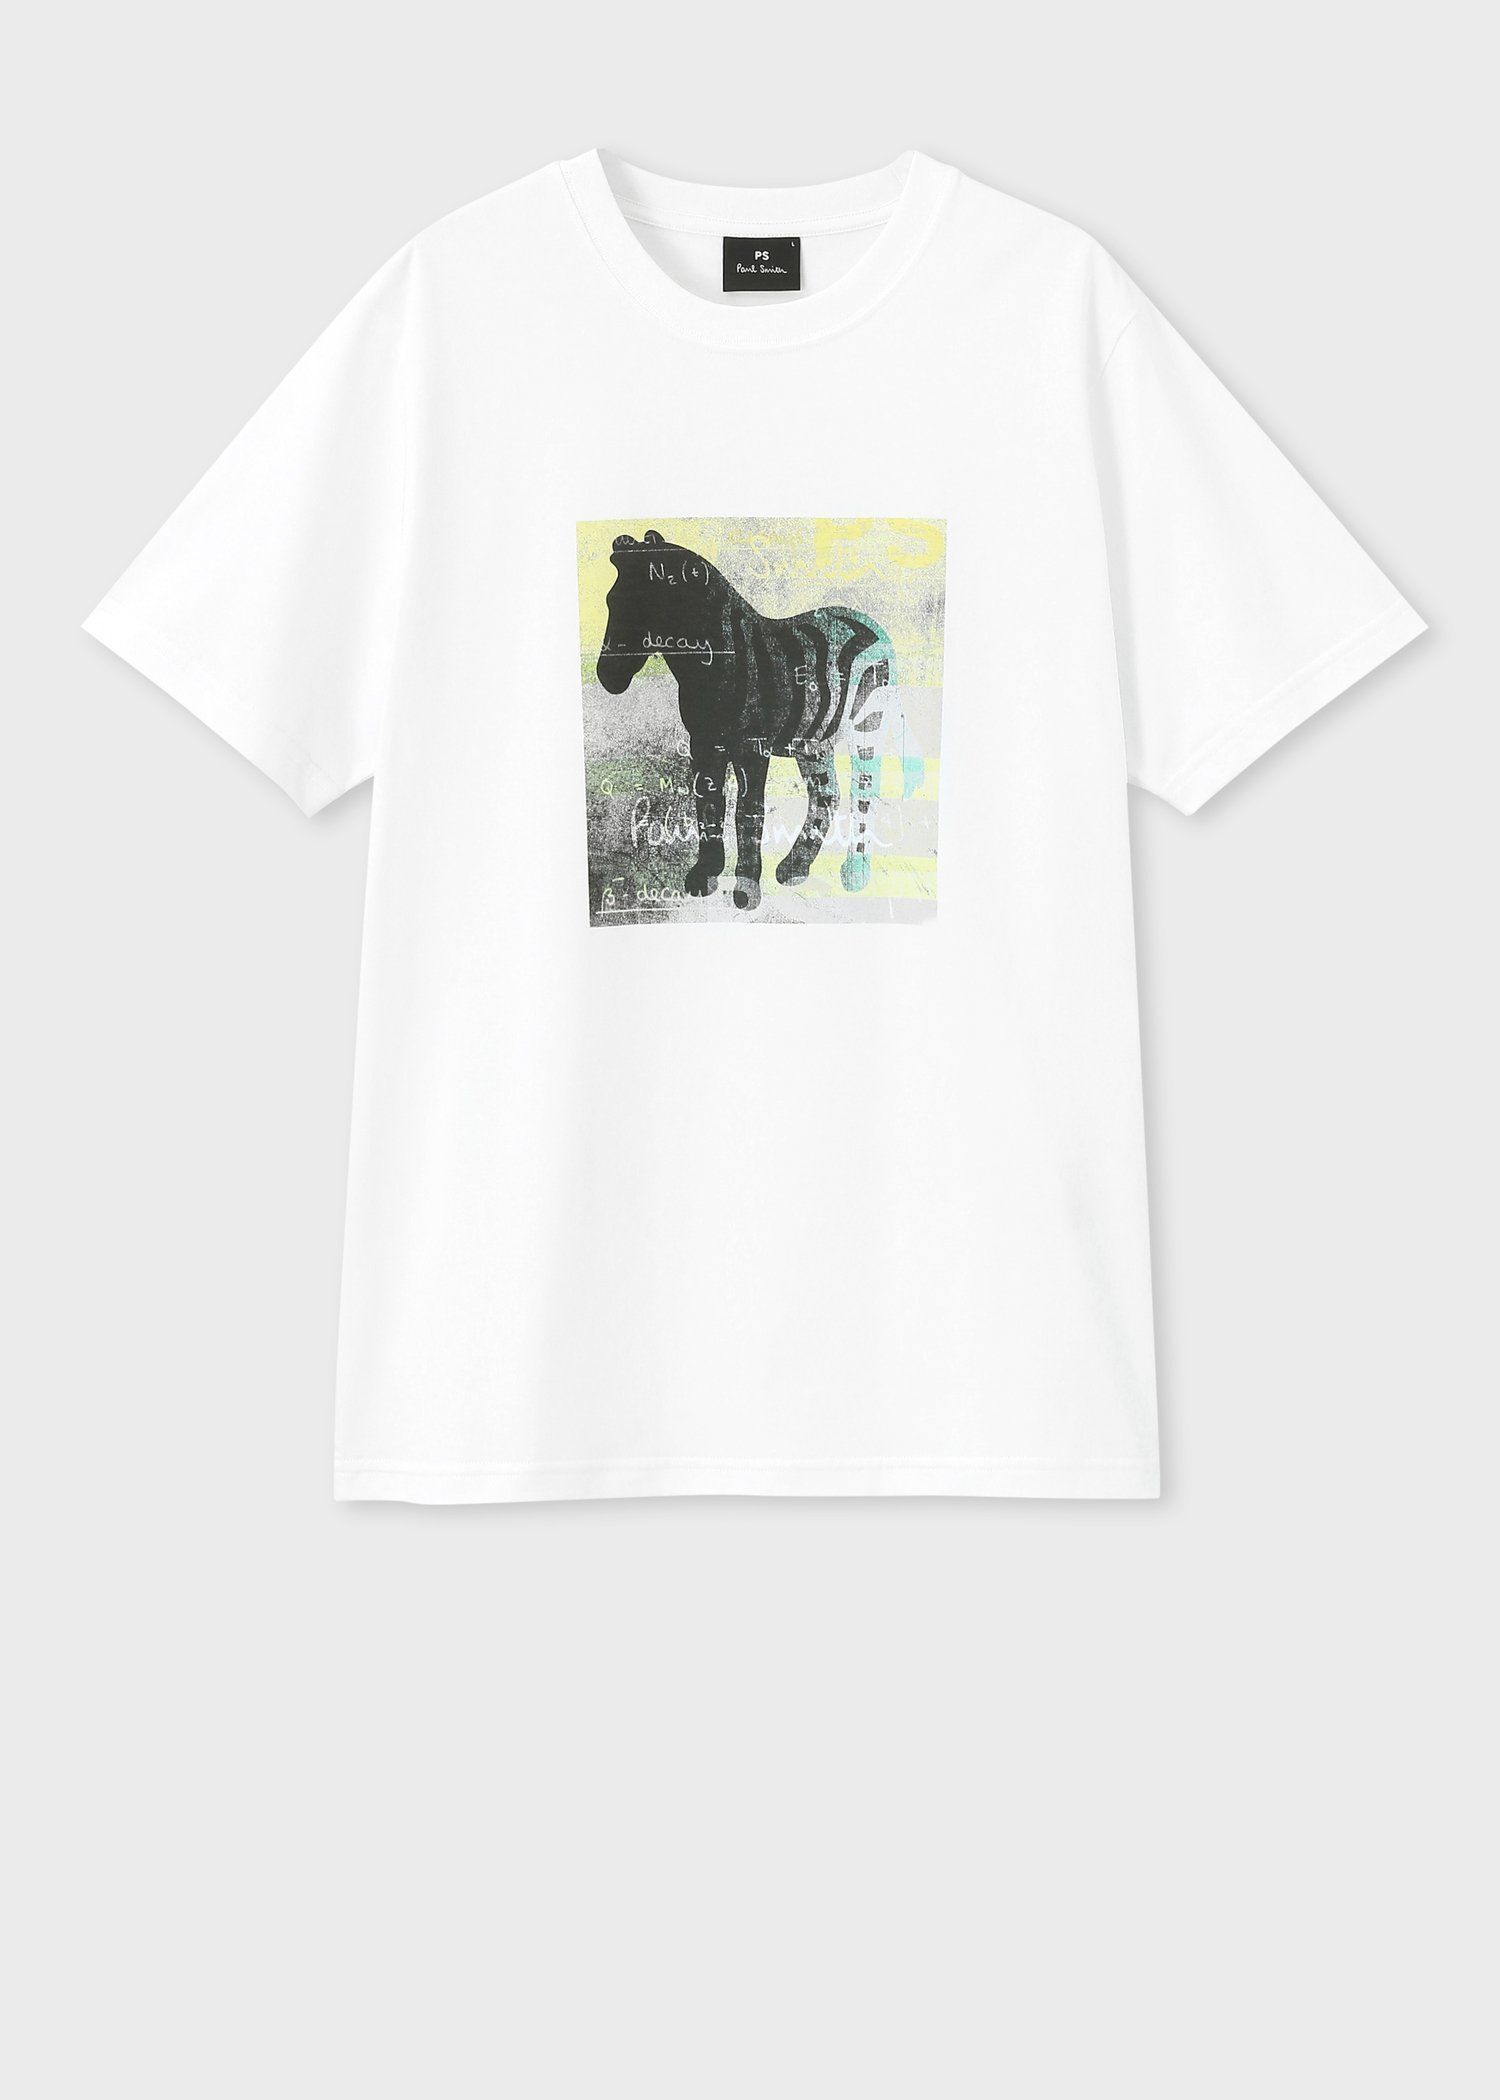 "Zebra Square" Tシャツ